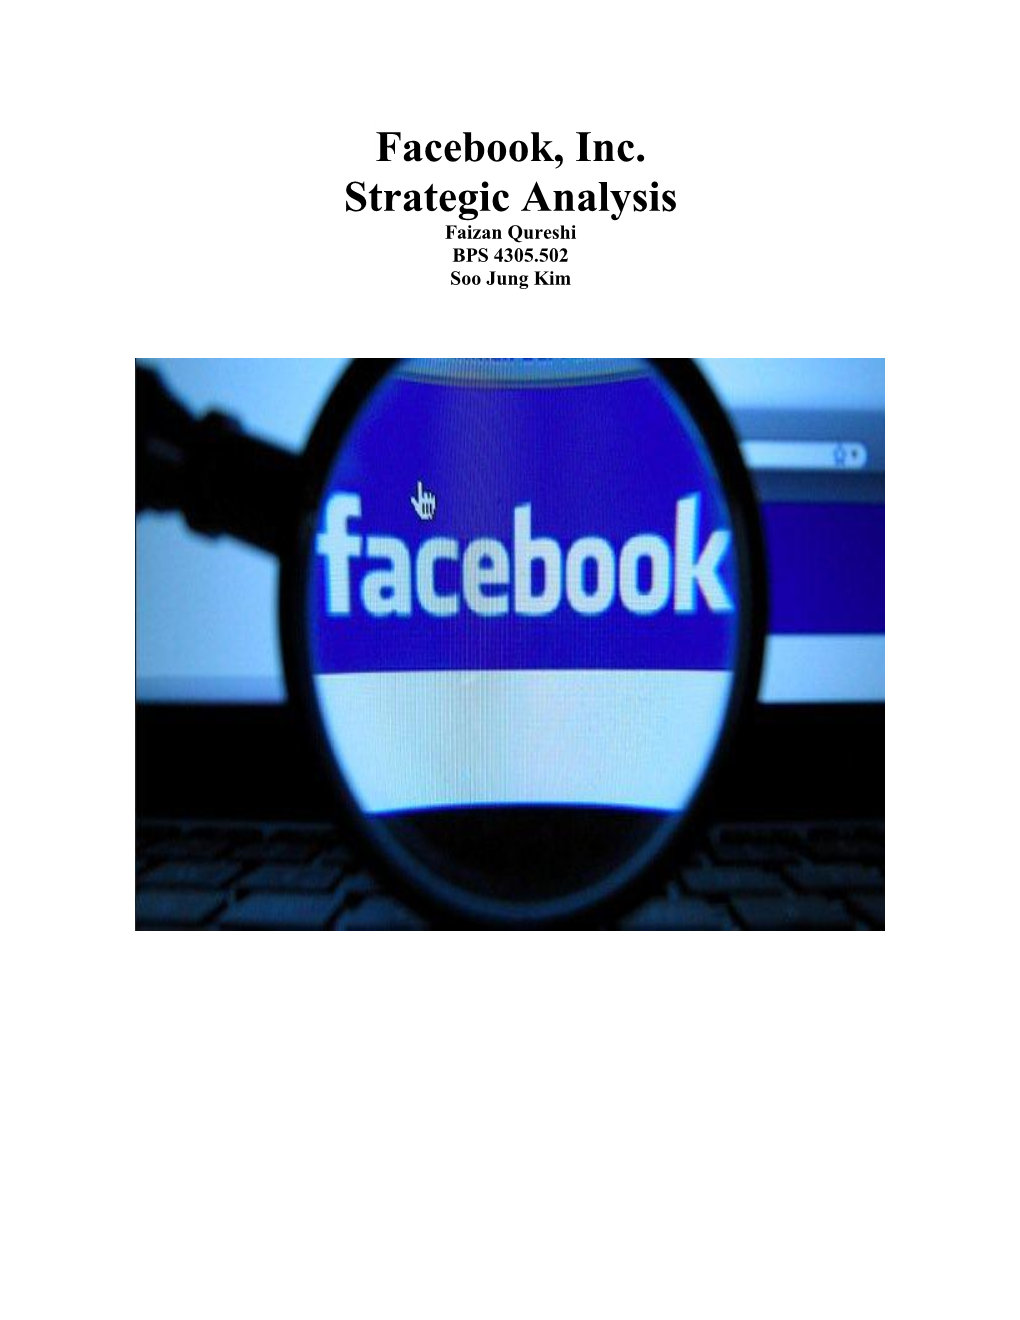 Facebook, Inc. Strategic Analysis Faizan Qureshi BPS 4305.502 Soo Jung Kim